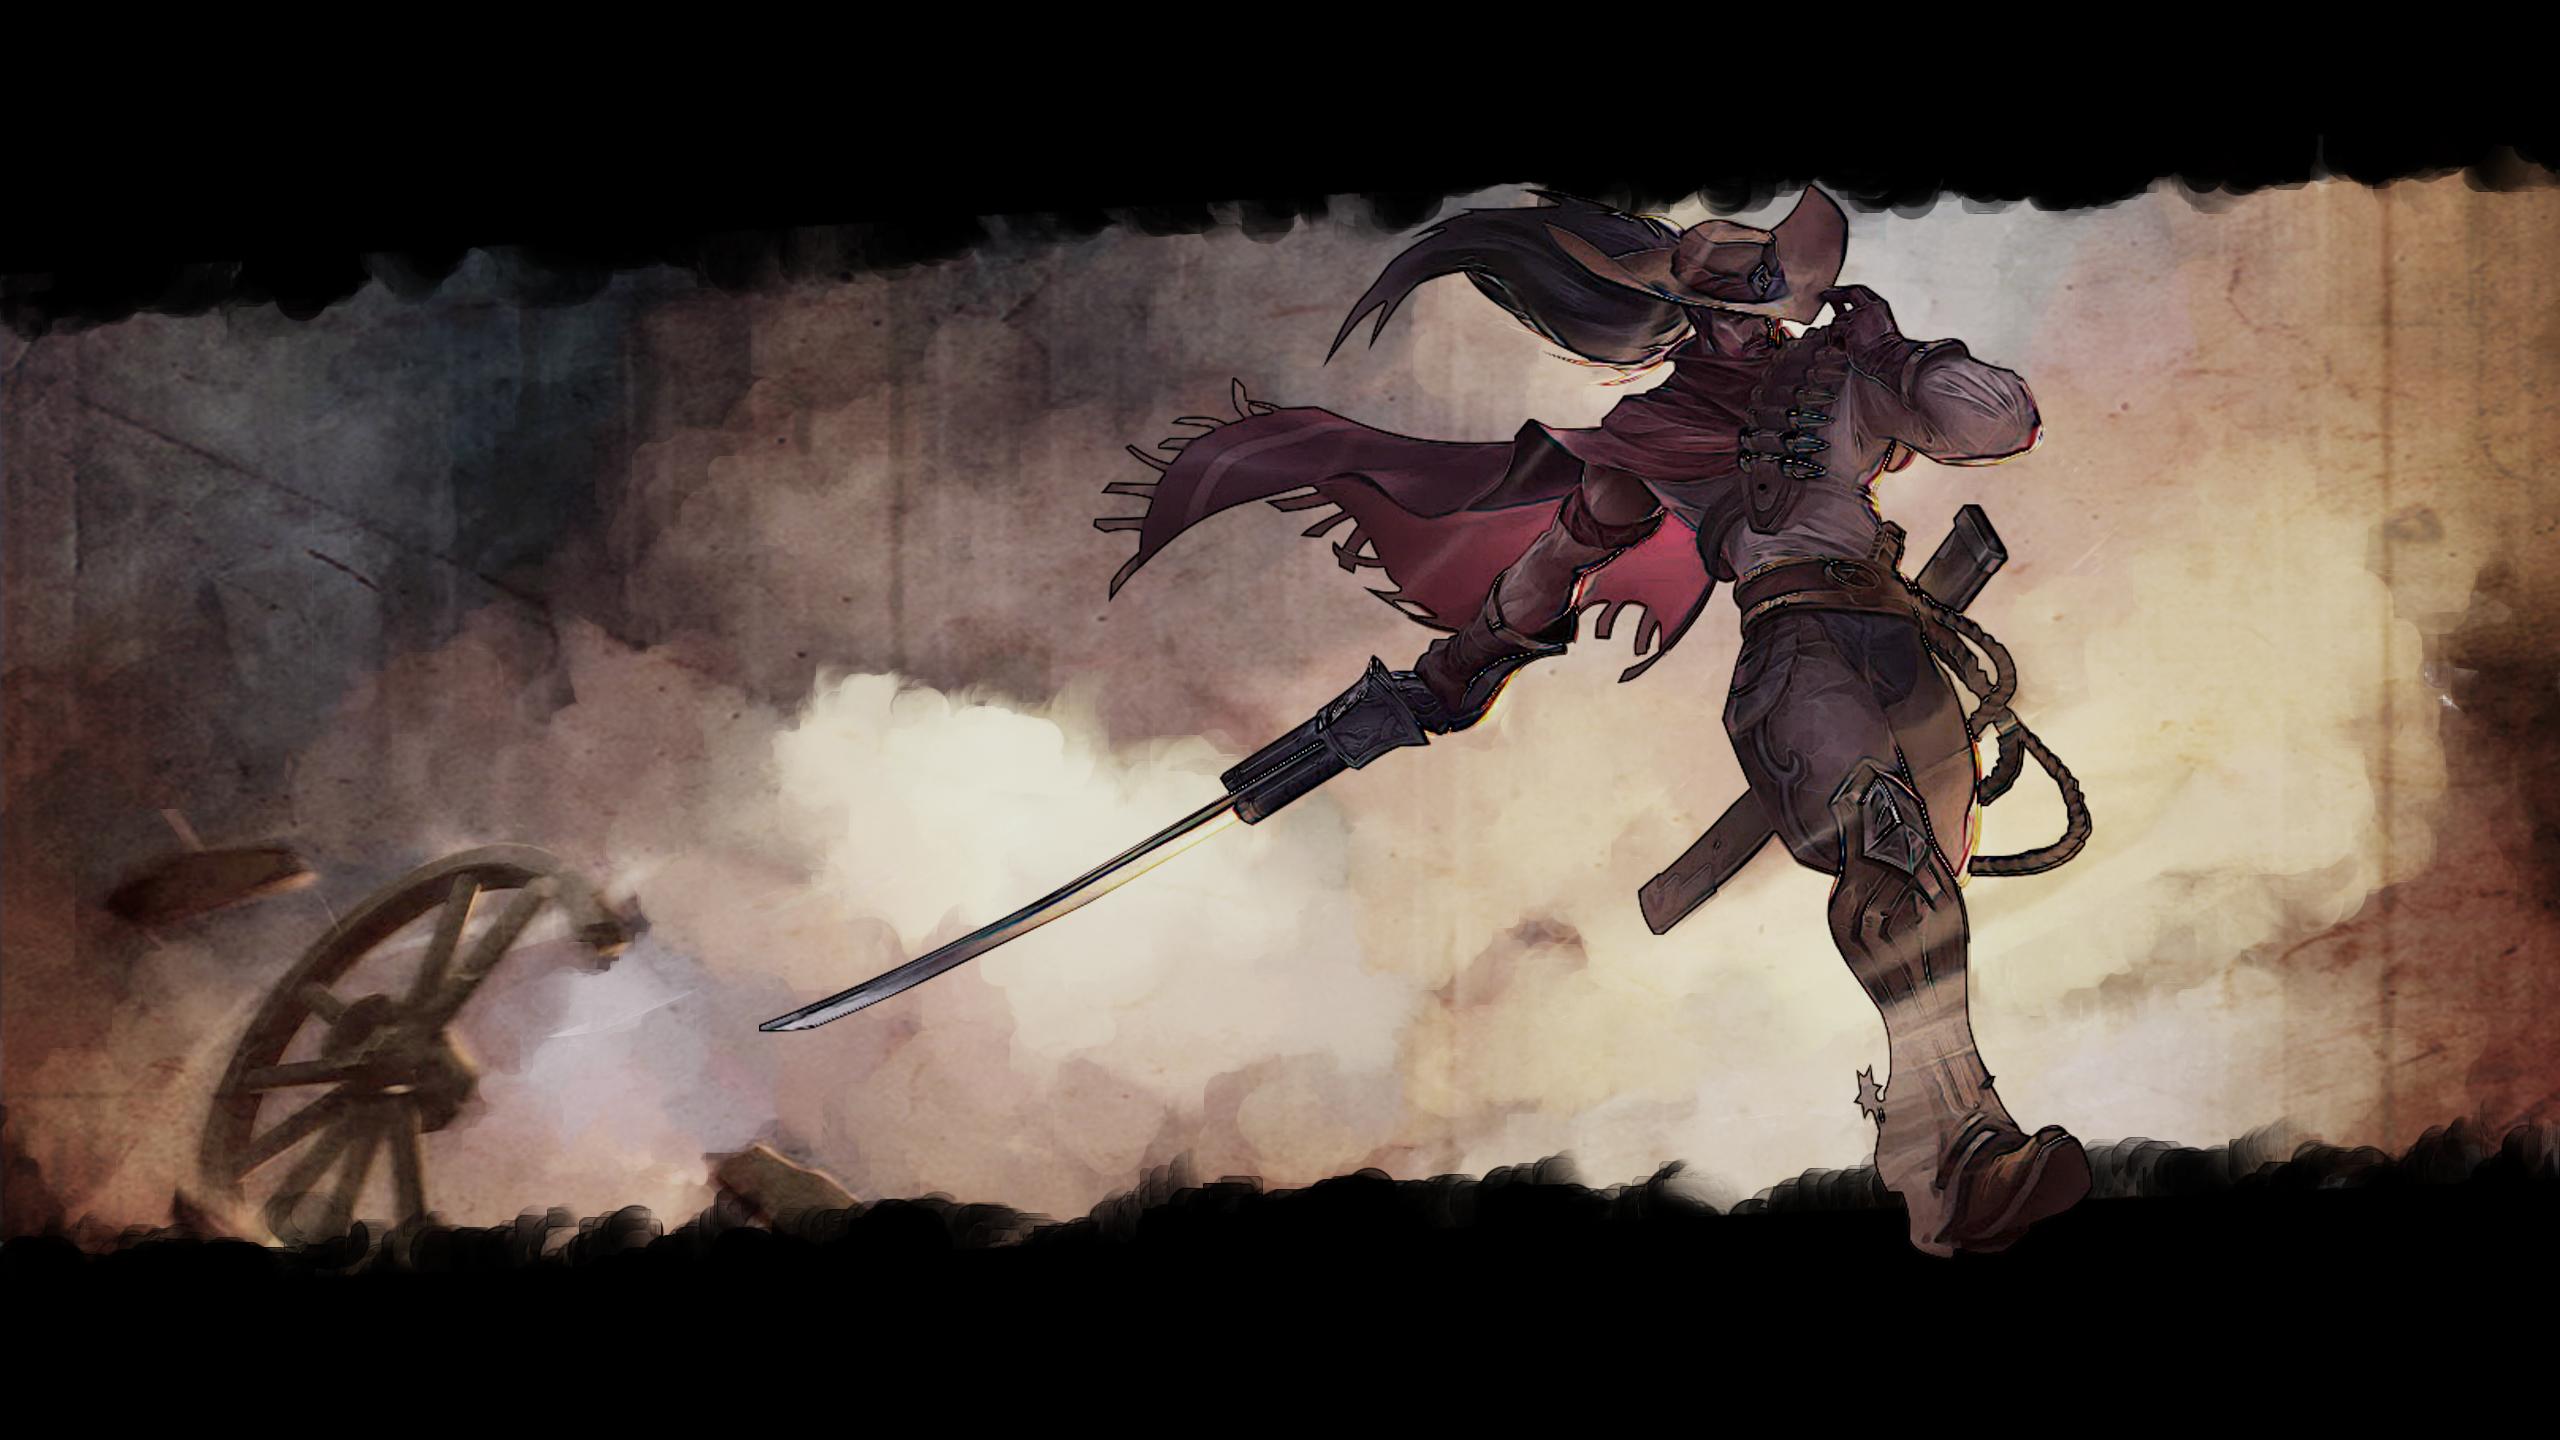 yasuo wallpaper,action adventure game,cg artwork,dragon,demon,illustration